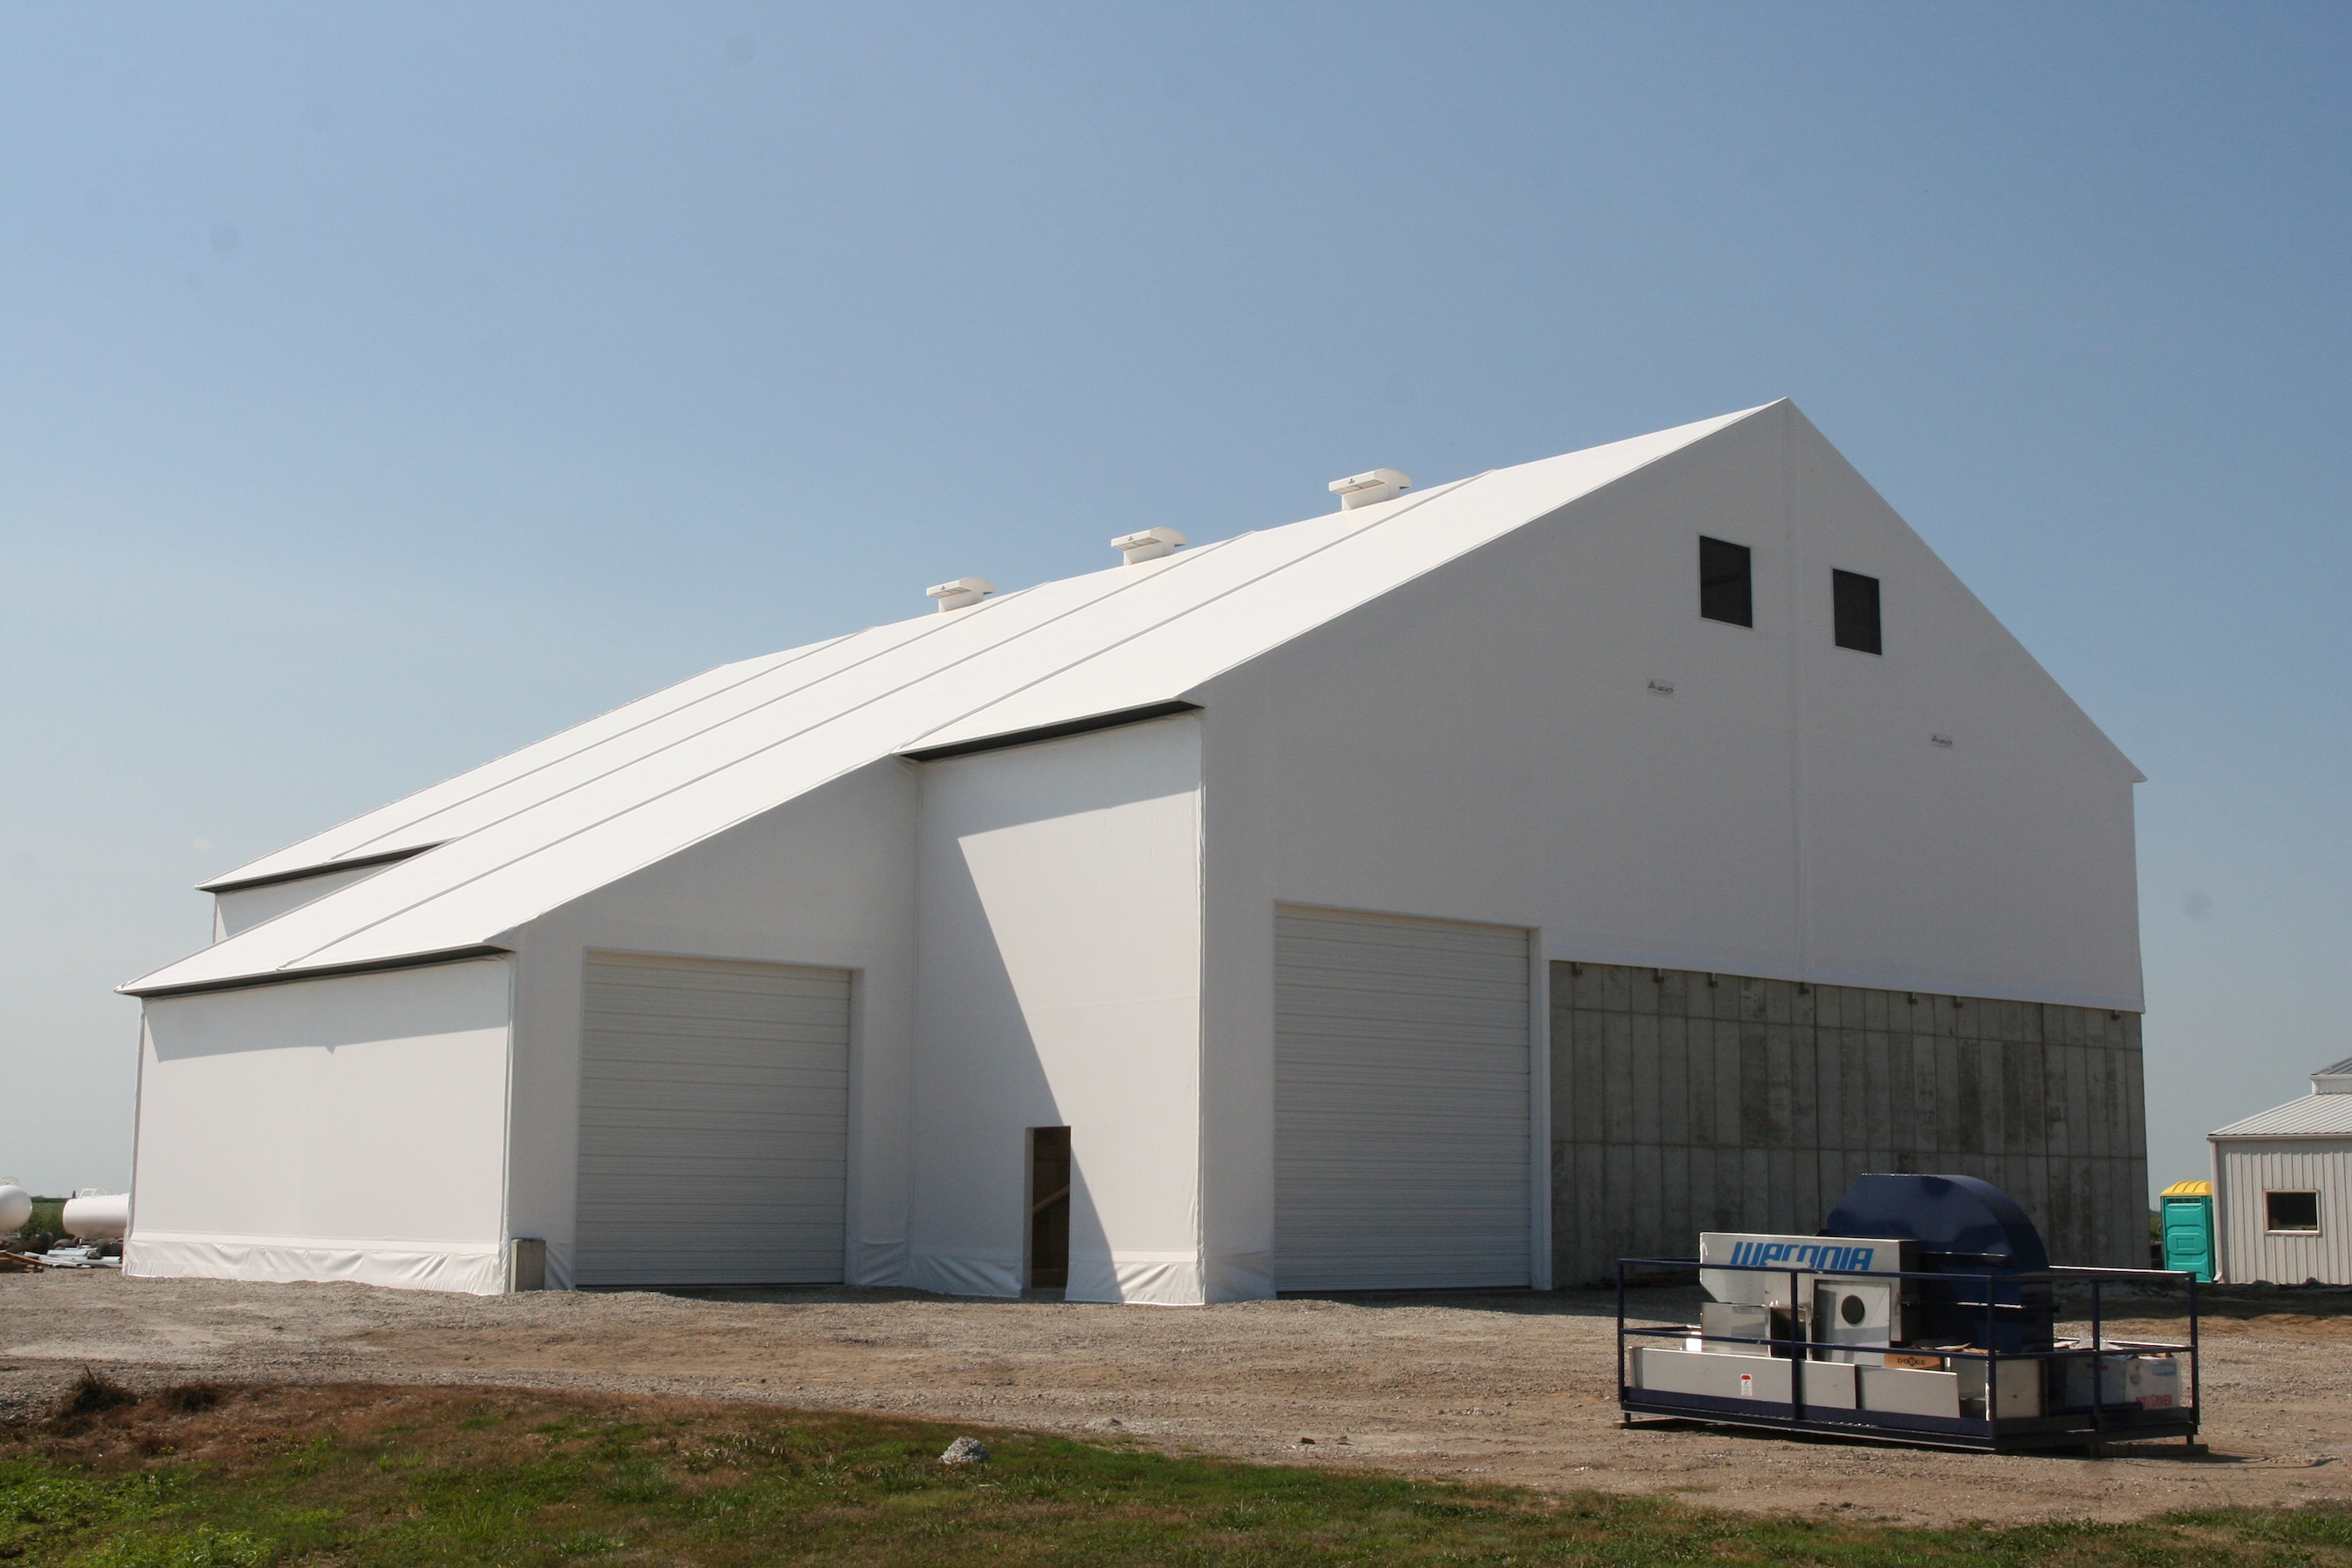 New Legacy tension fabric storage facility for Agriland FS in Wyman, Iowa.